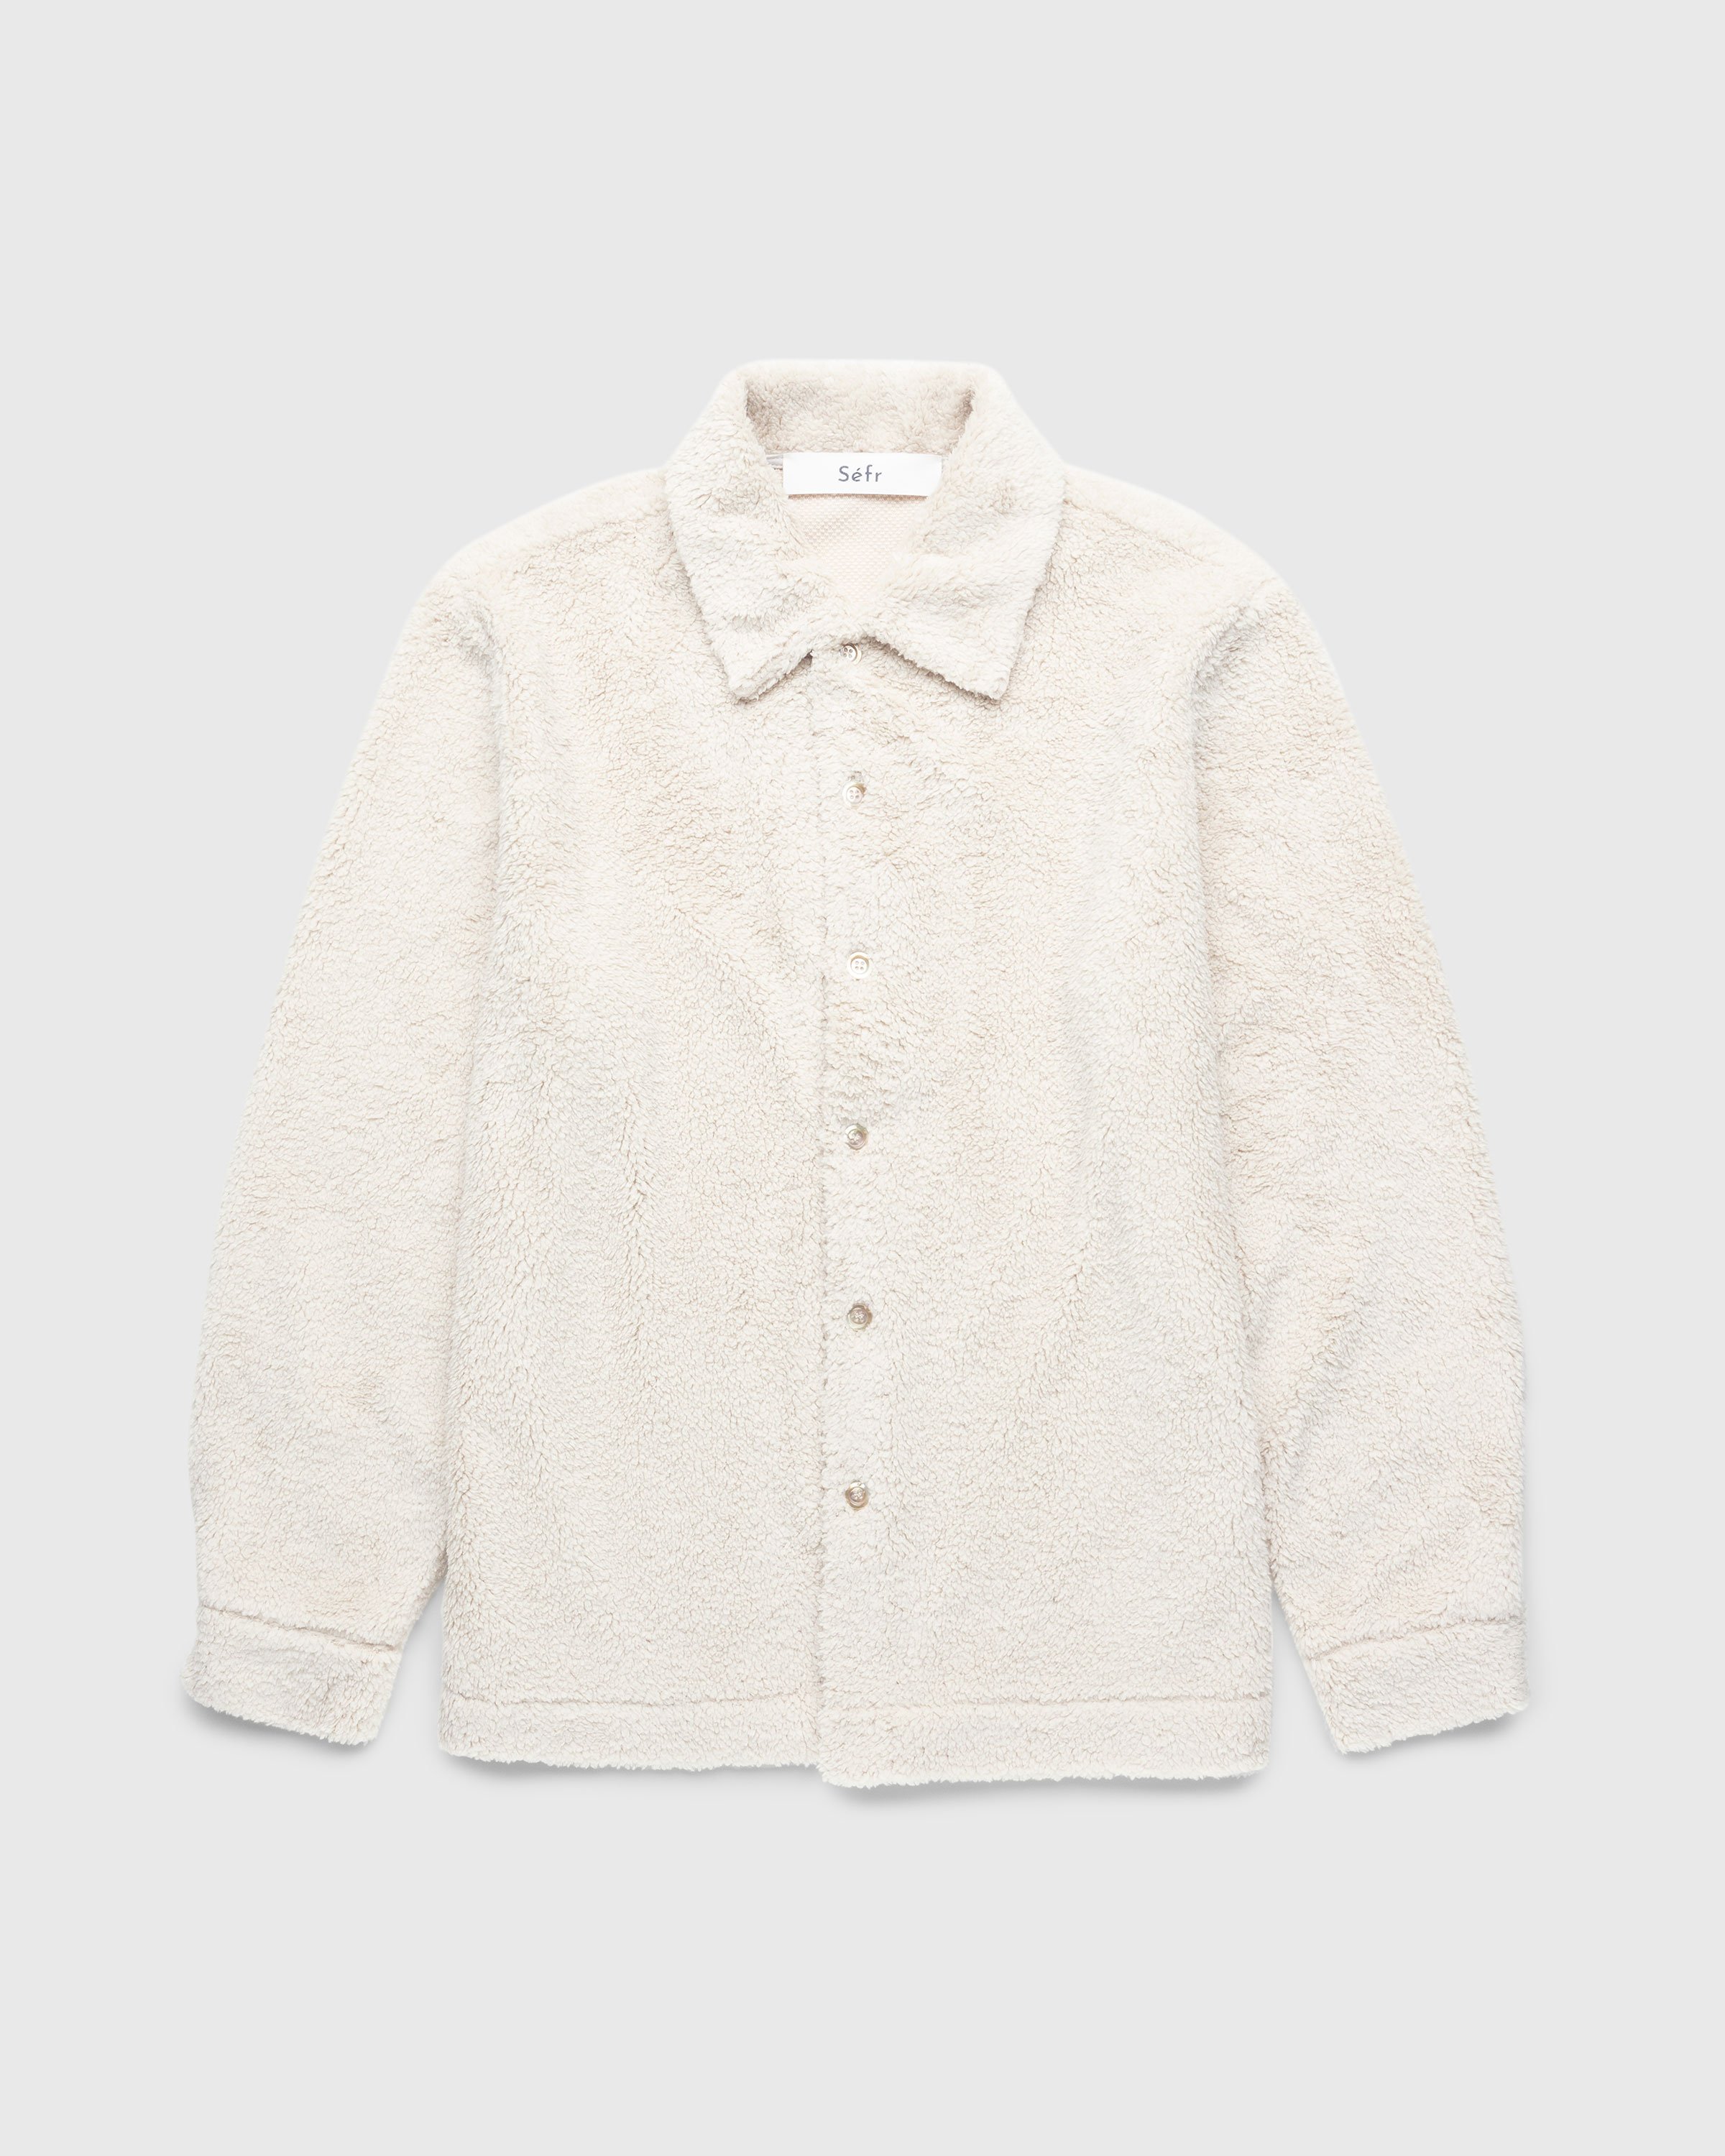 Séfr - Sense Overshirt Polar White Fleece - Clothing - White - Image 1